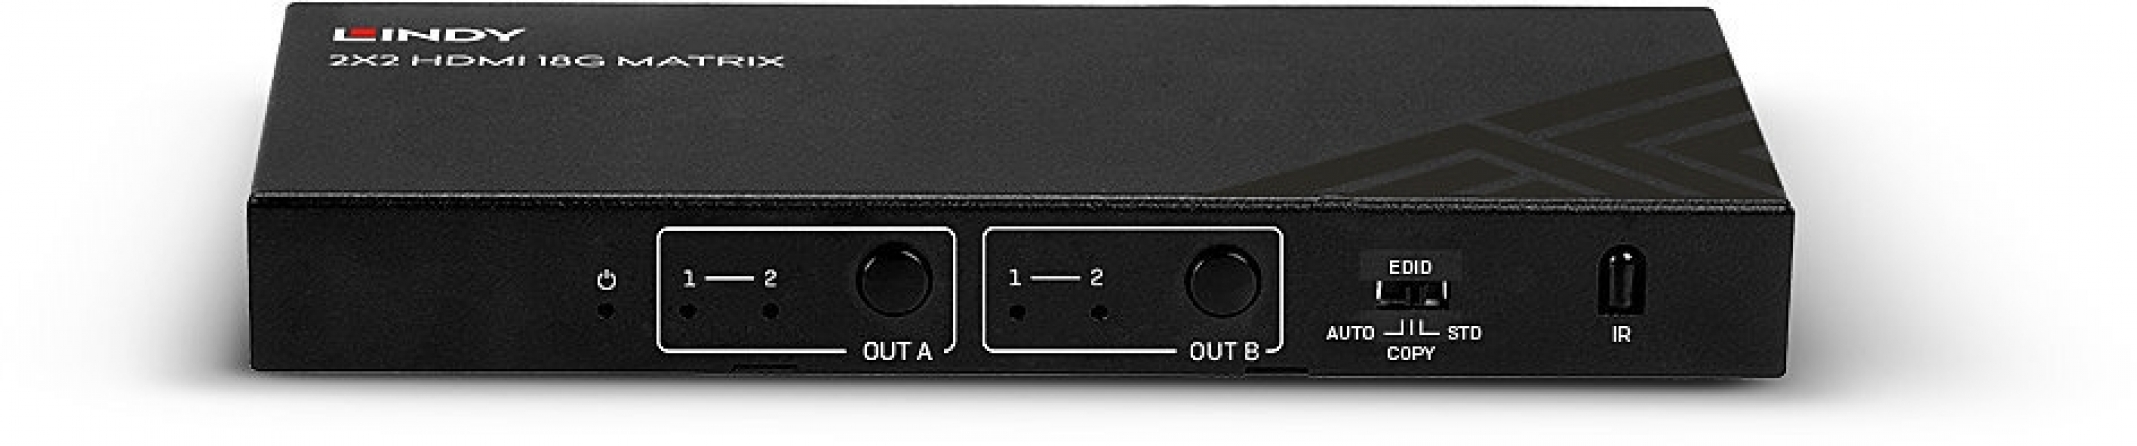 Switch Matrice HDMI 18G, 2x2